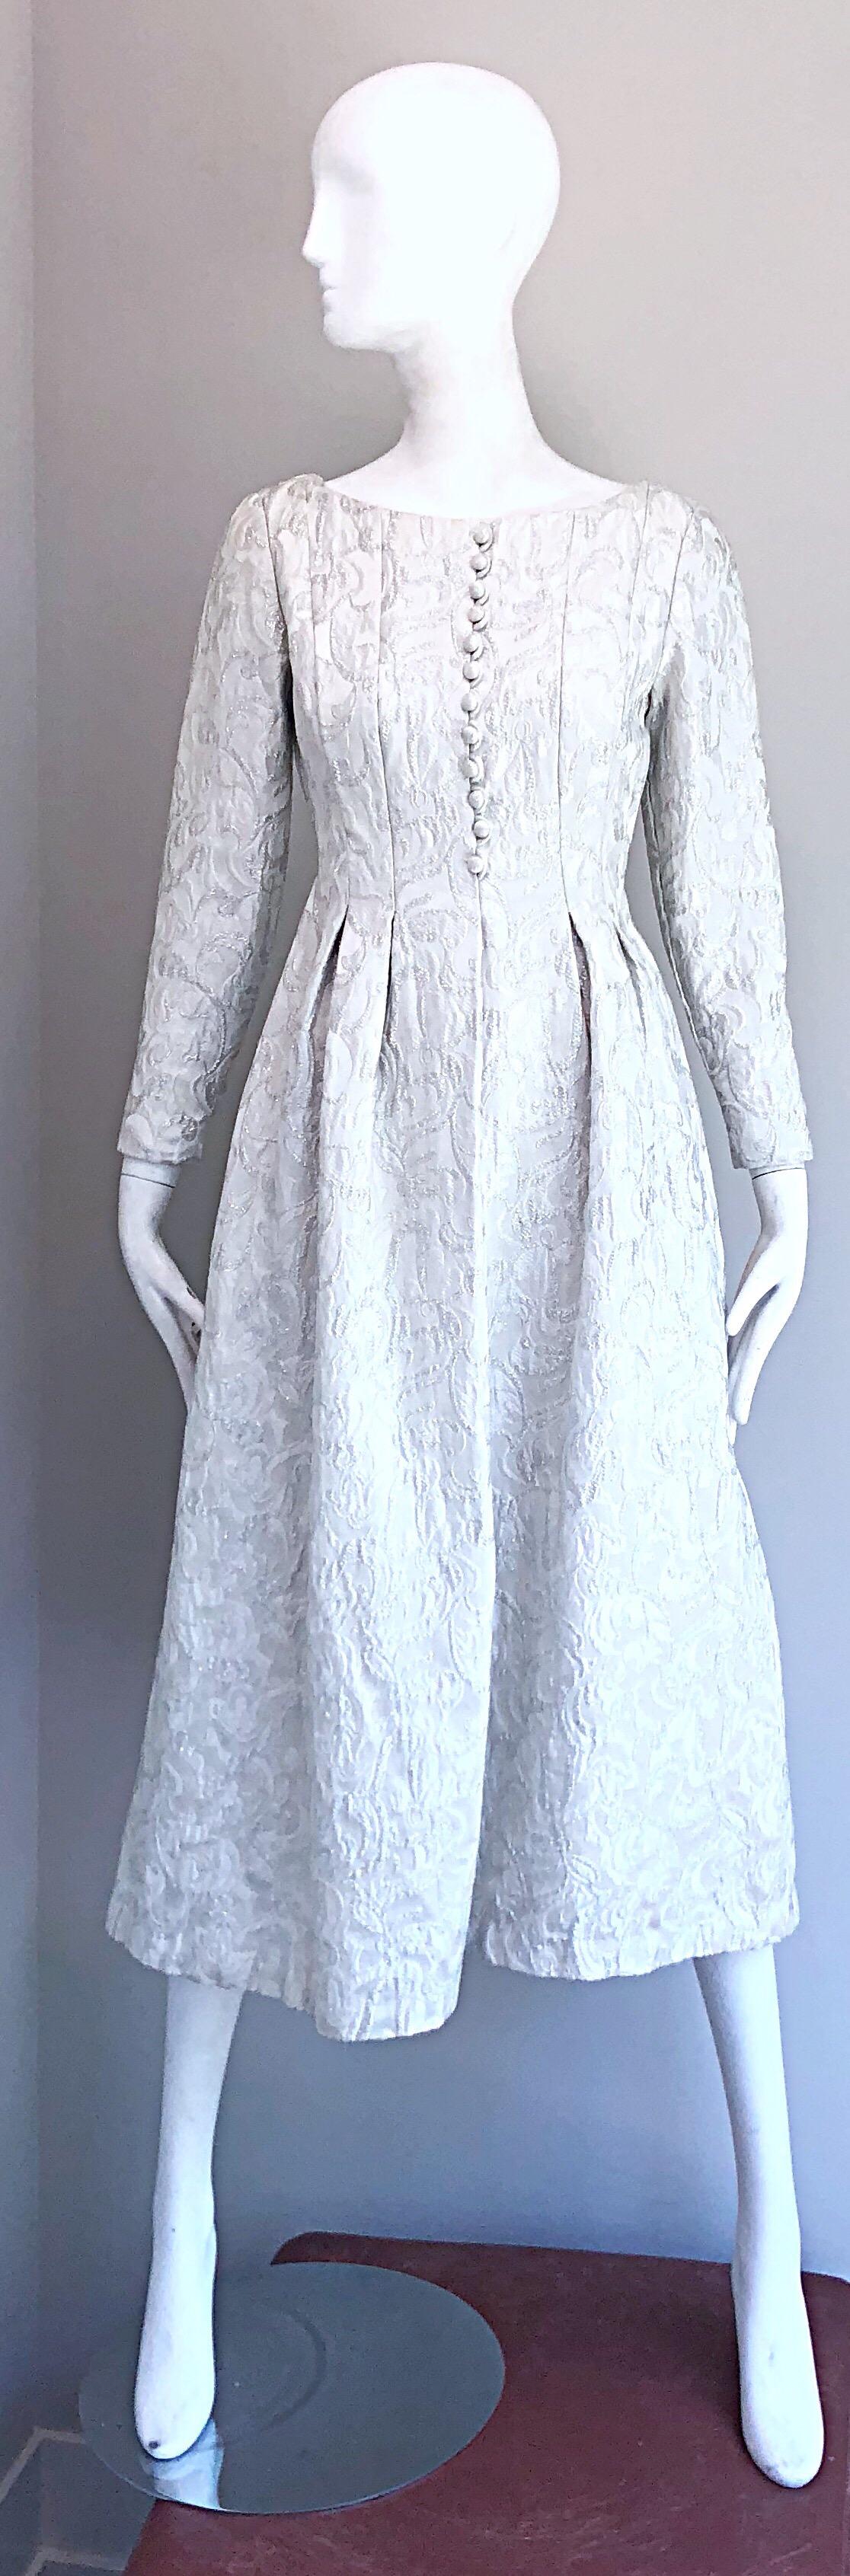 white brocade dress